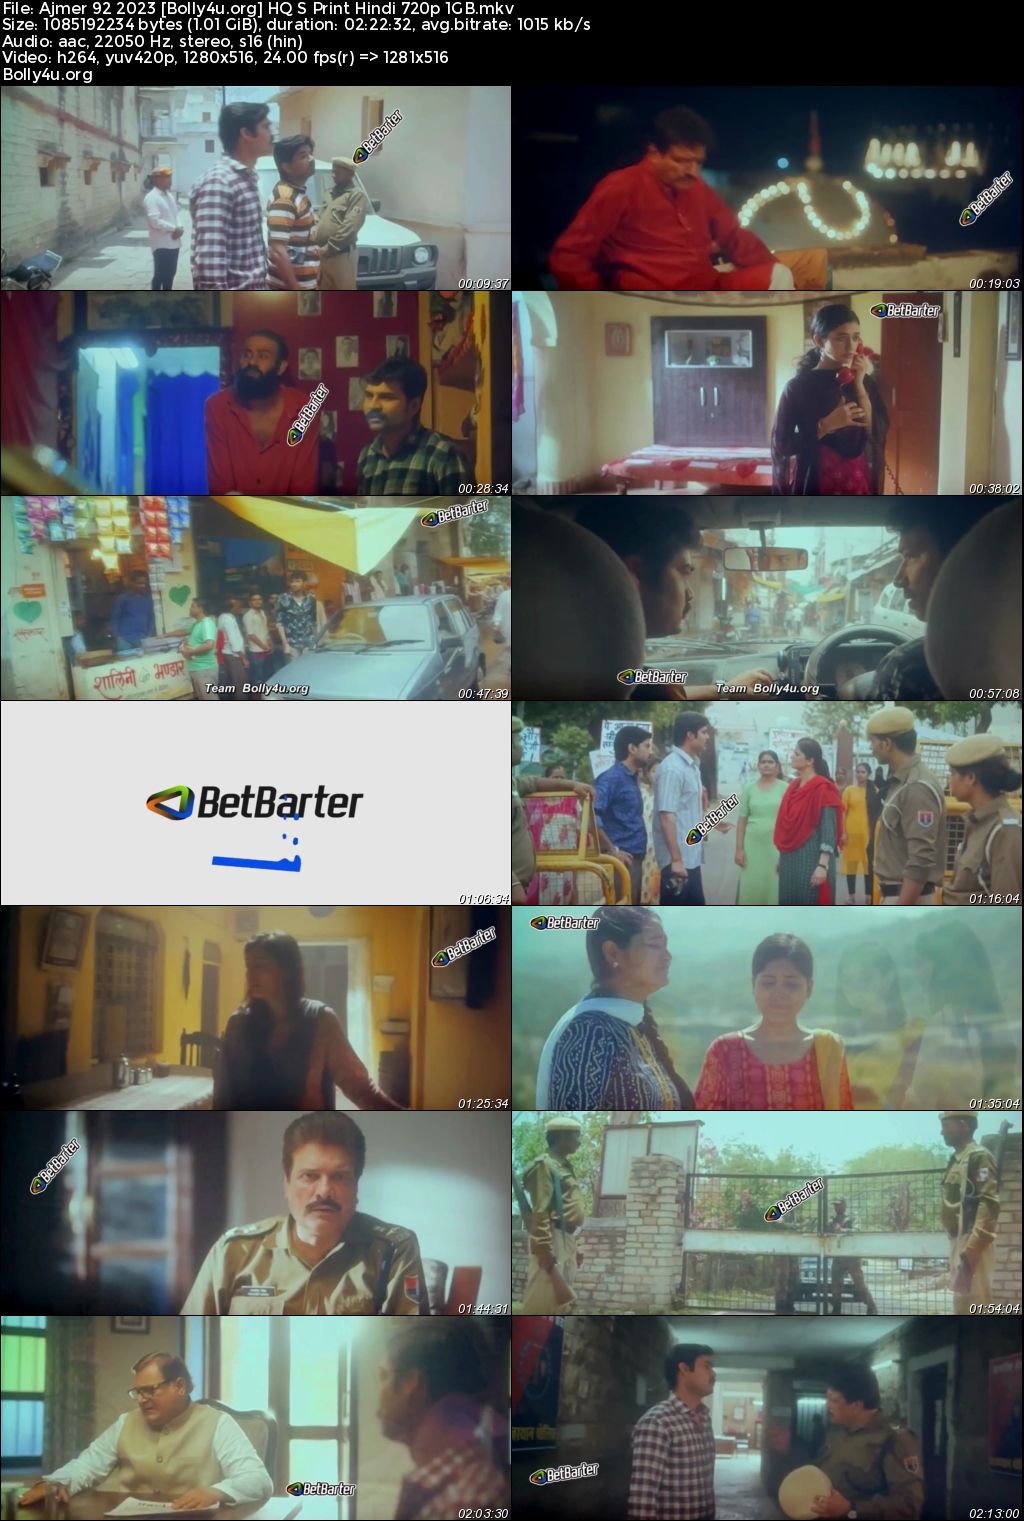 Ajmer 92 2023 HQ S Print Hindi Full Movie Download 1080p 720p 480p